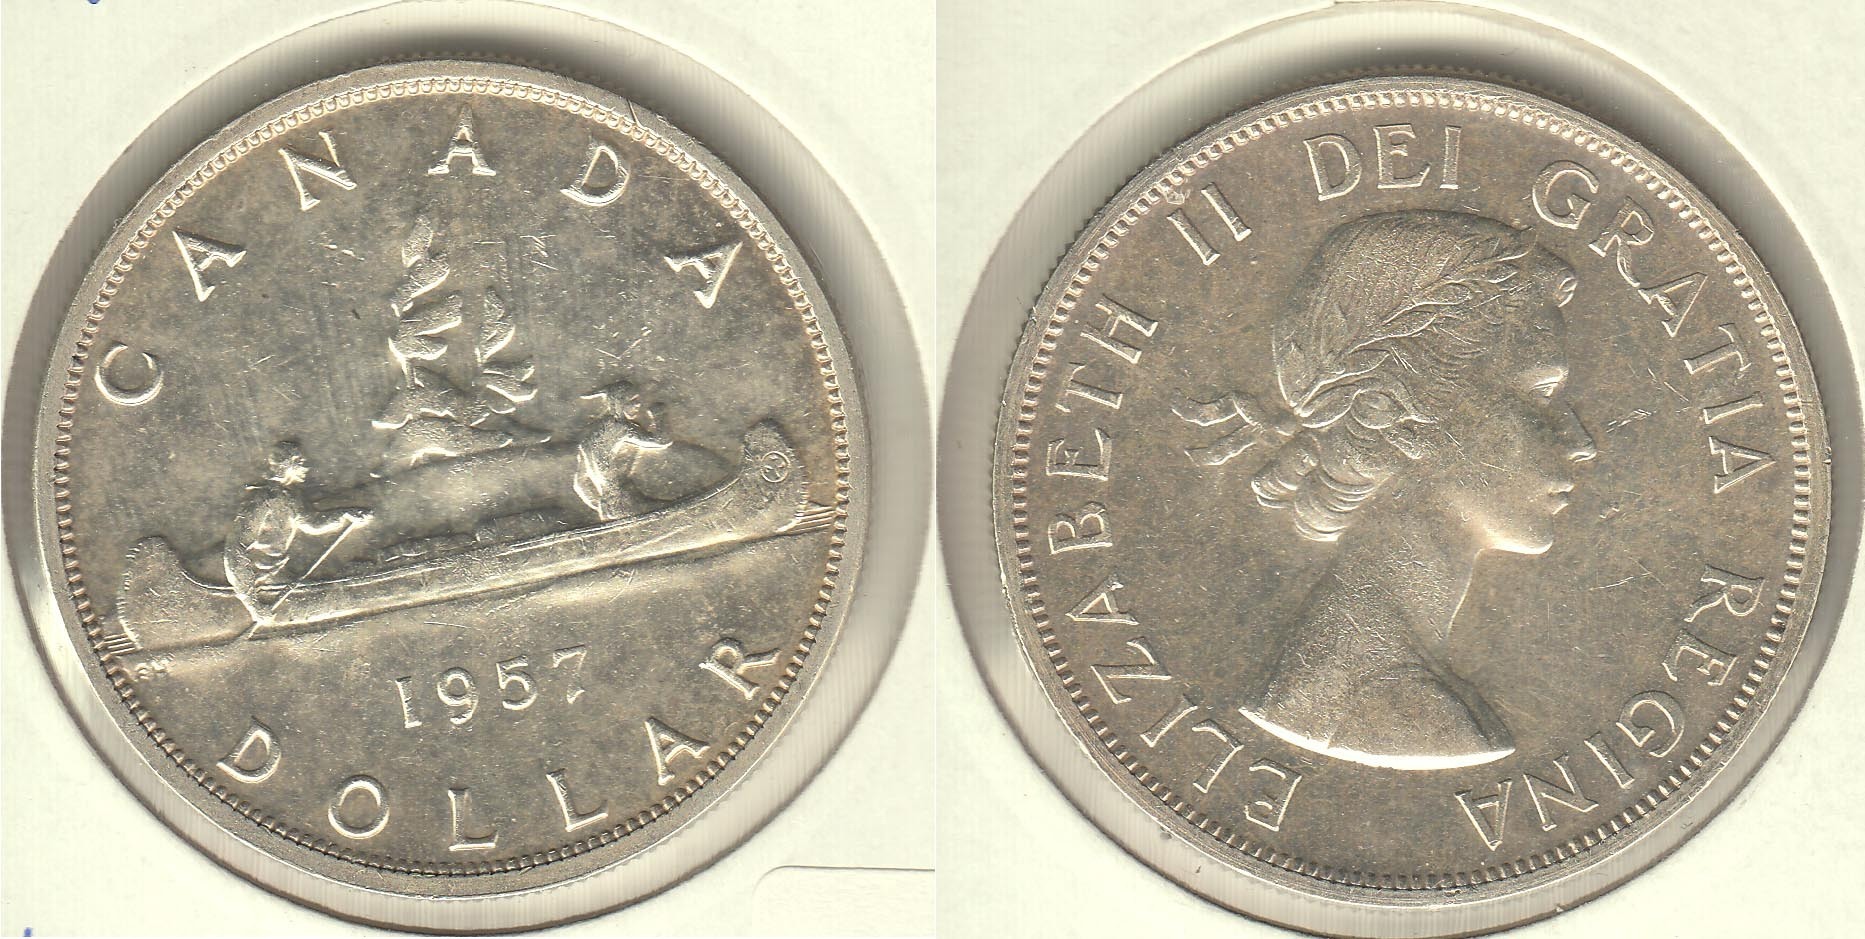 CANADA. 1 DOLAR (DOLLAR) DE 1957. PLATA 0.800.